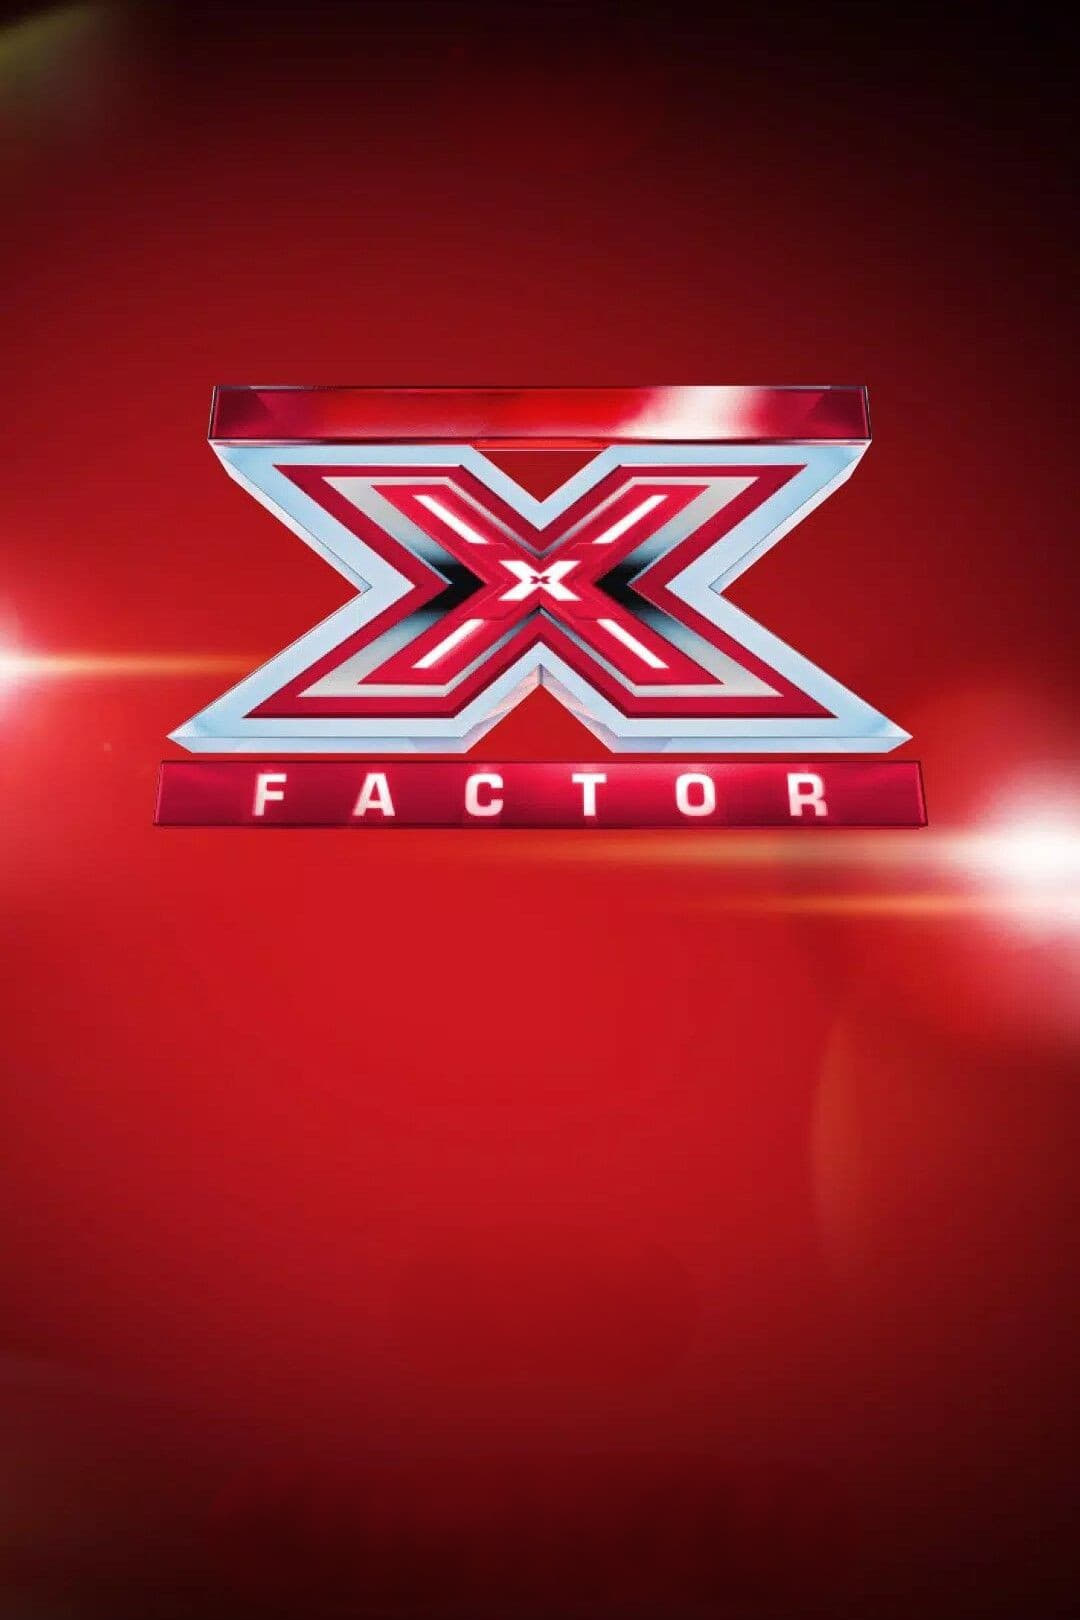 The X Factor Malta